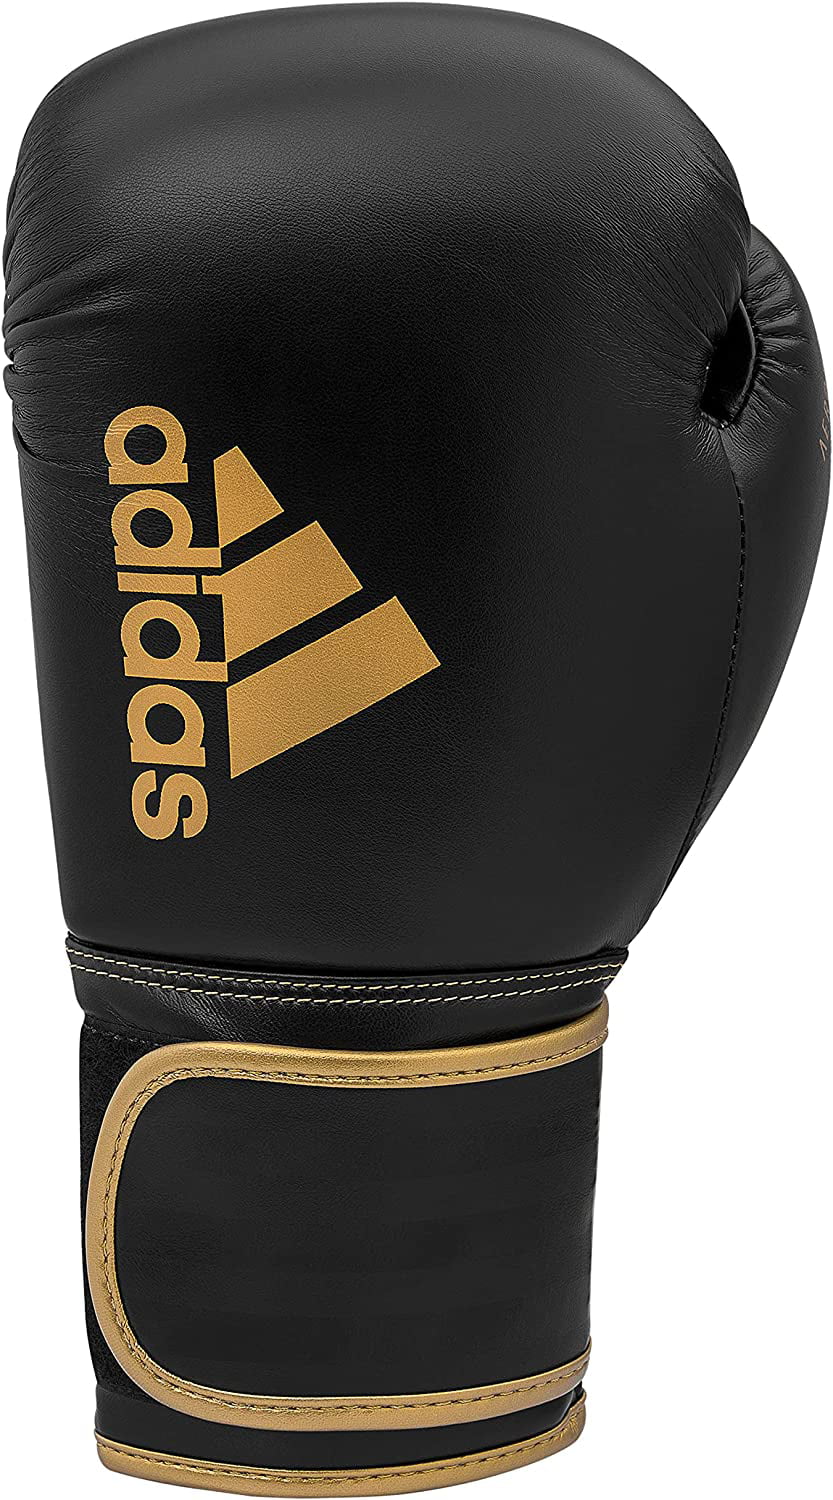 Adidas Hybrid 80 Boxing Gloves, pair set - Training Gloves for Kickboxing -  Sparring Gloves for Men, Women and Kids - Black/Gold, 6 oz | Boxhandschuhe